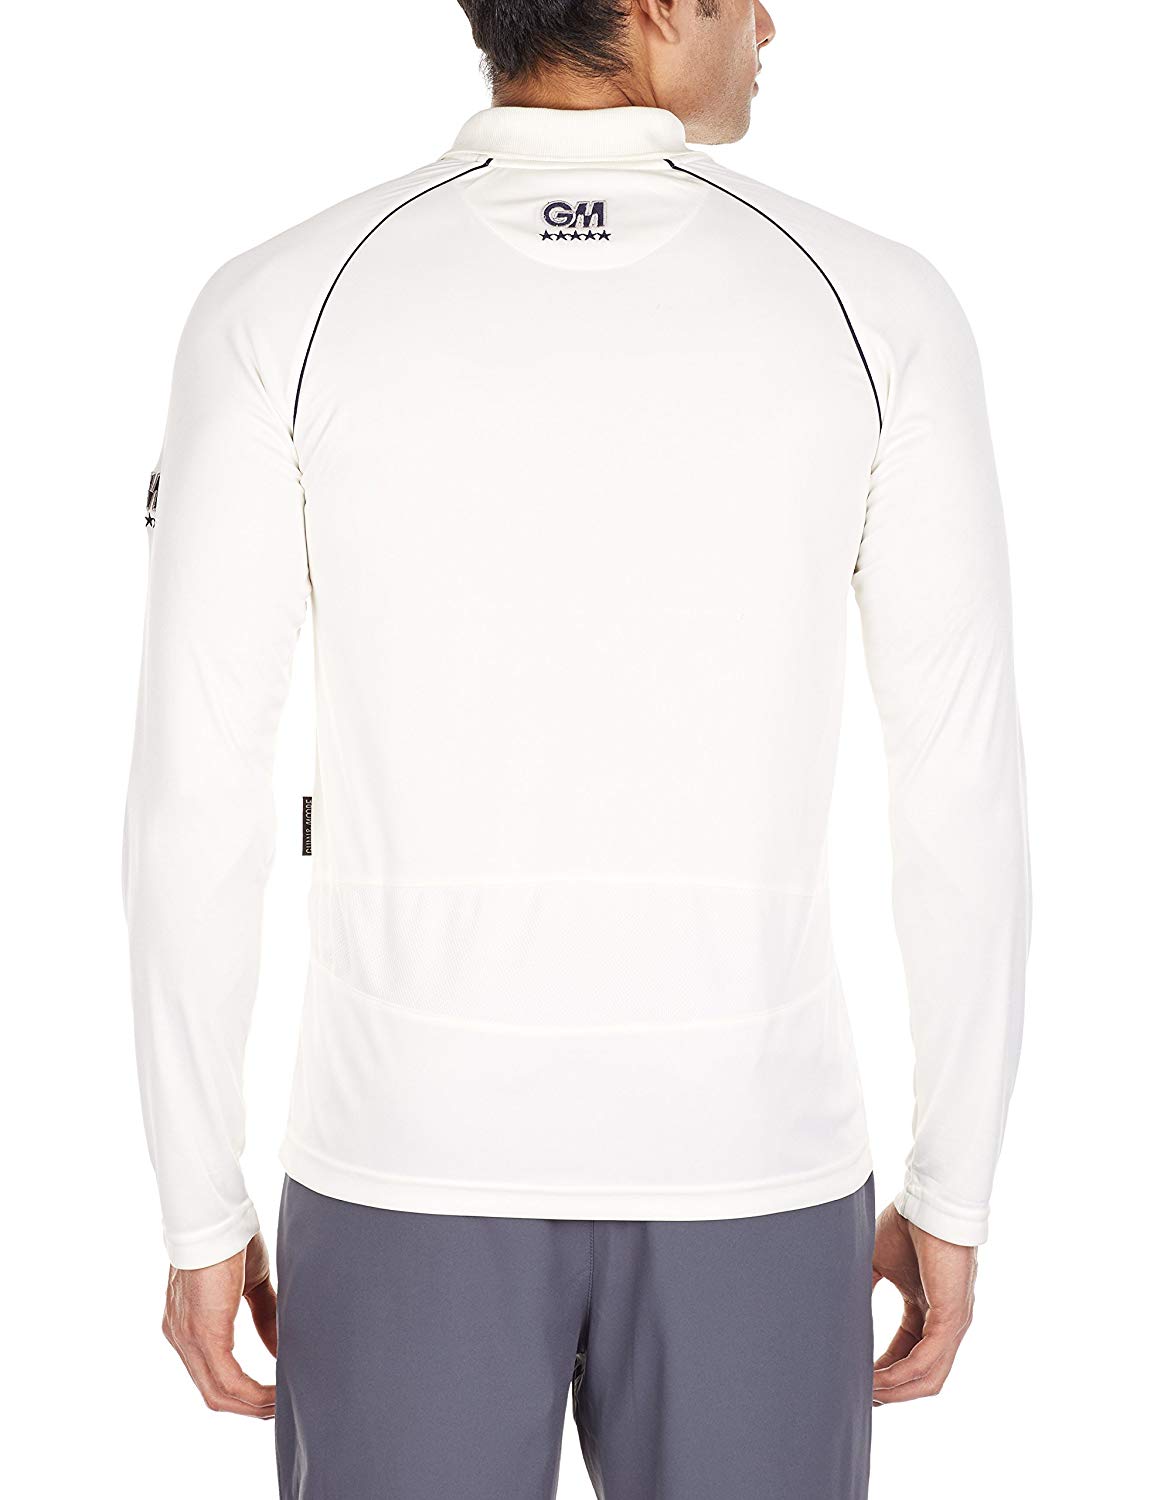 GM 7205 Full Sleeves Cricket T-Shirt (White/Navy) - Best Price online Prokicksports.com